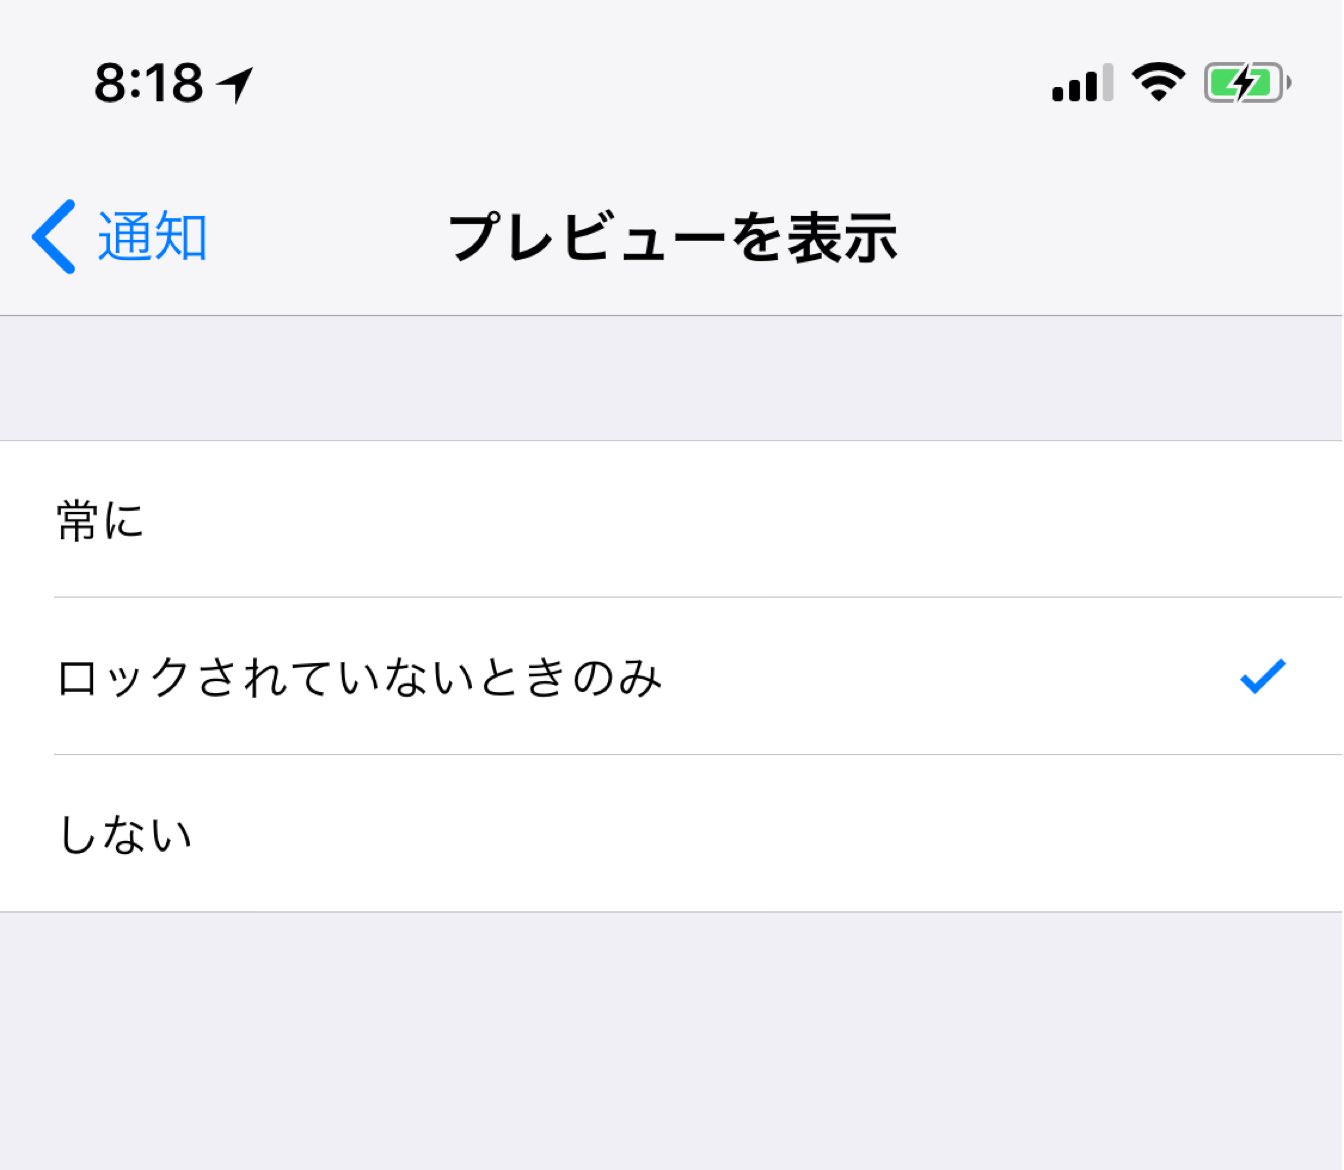 iphone-x-rock-notification-6